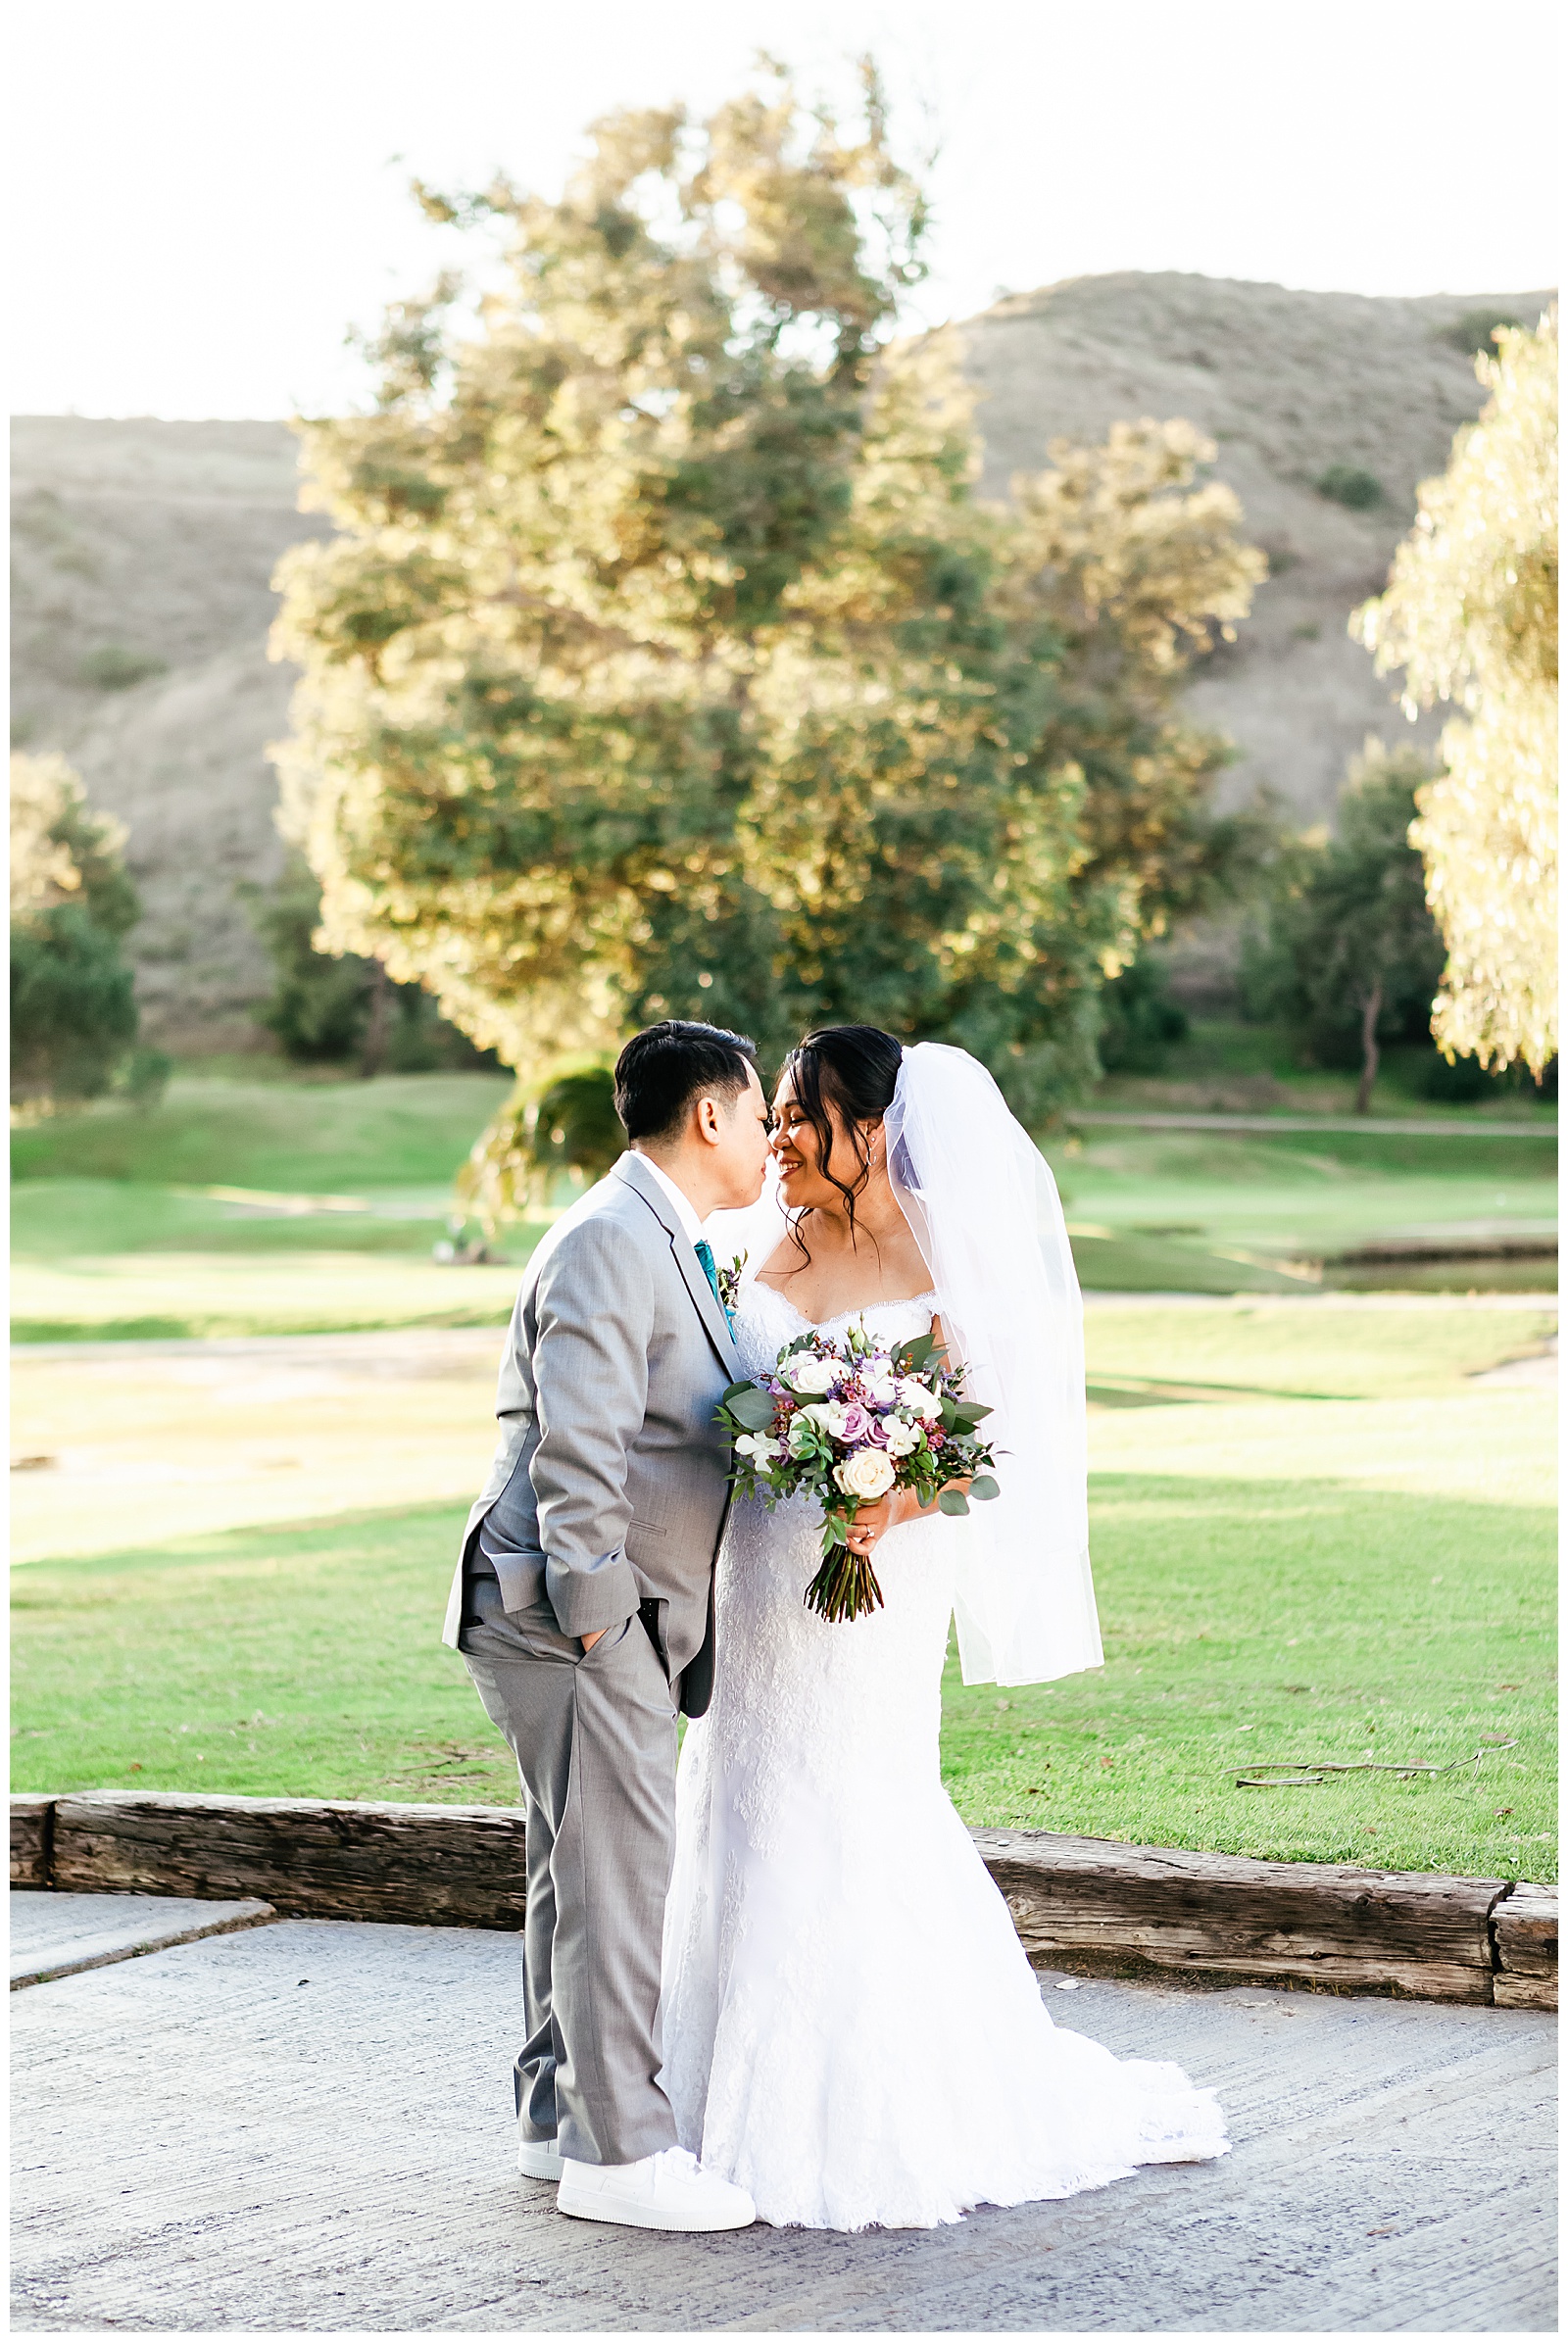 San-diego-wedding-photographer-photography-admiral-baker-kidd-mission-valley-bride-groom-bride-groom-love-sd-weddings-rancho-penasquitos-rancho-bernardo-poway-photographers-weddings-ceremony-reception-lavender-